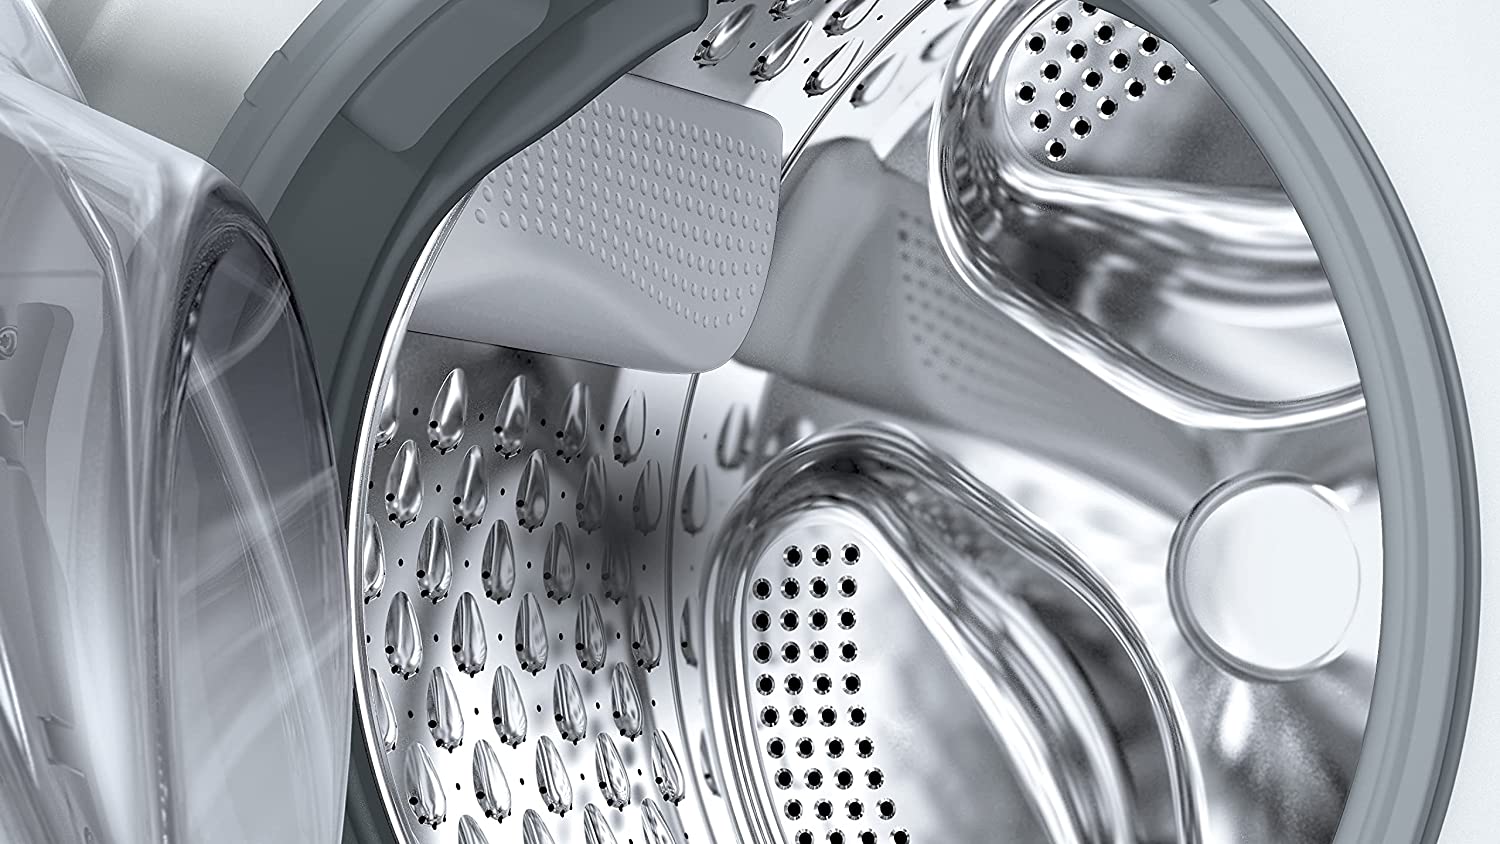 Bosch 9 kg/6 kg WNA14400IN Inverter Front Load Washer Dryer ( White, Inbuilt Heater) - Mahajan Electronics Online